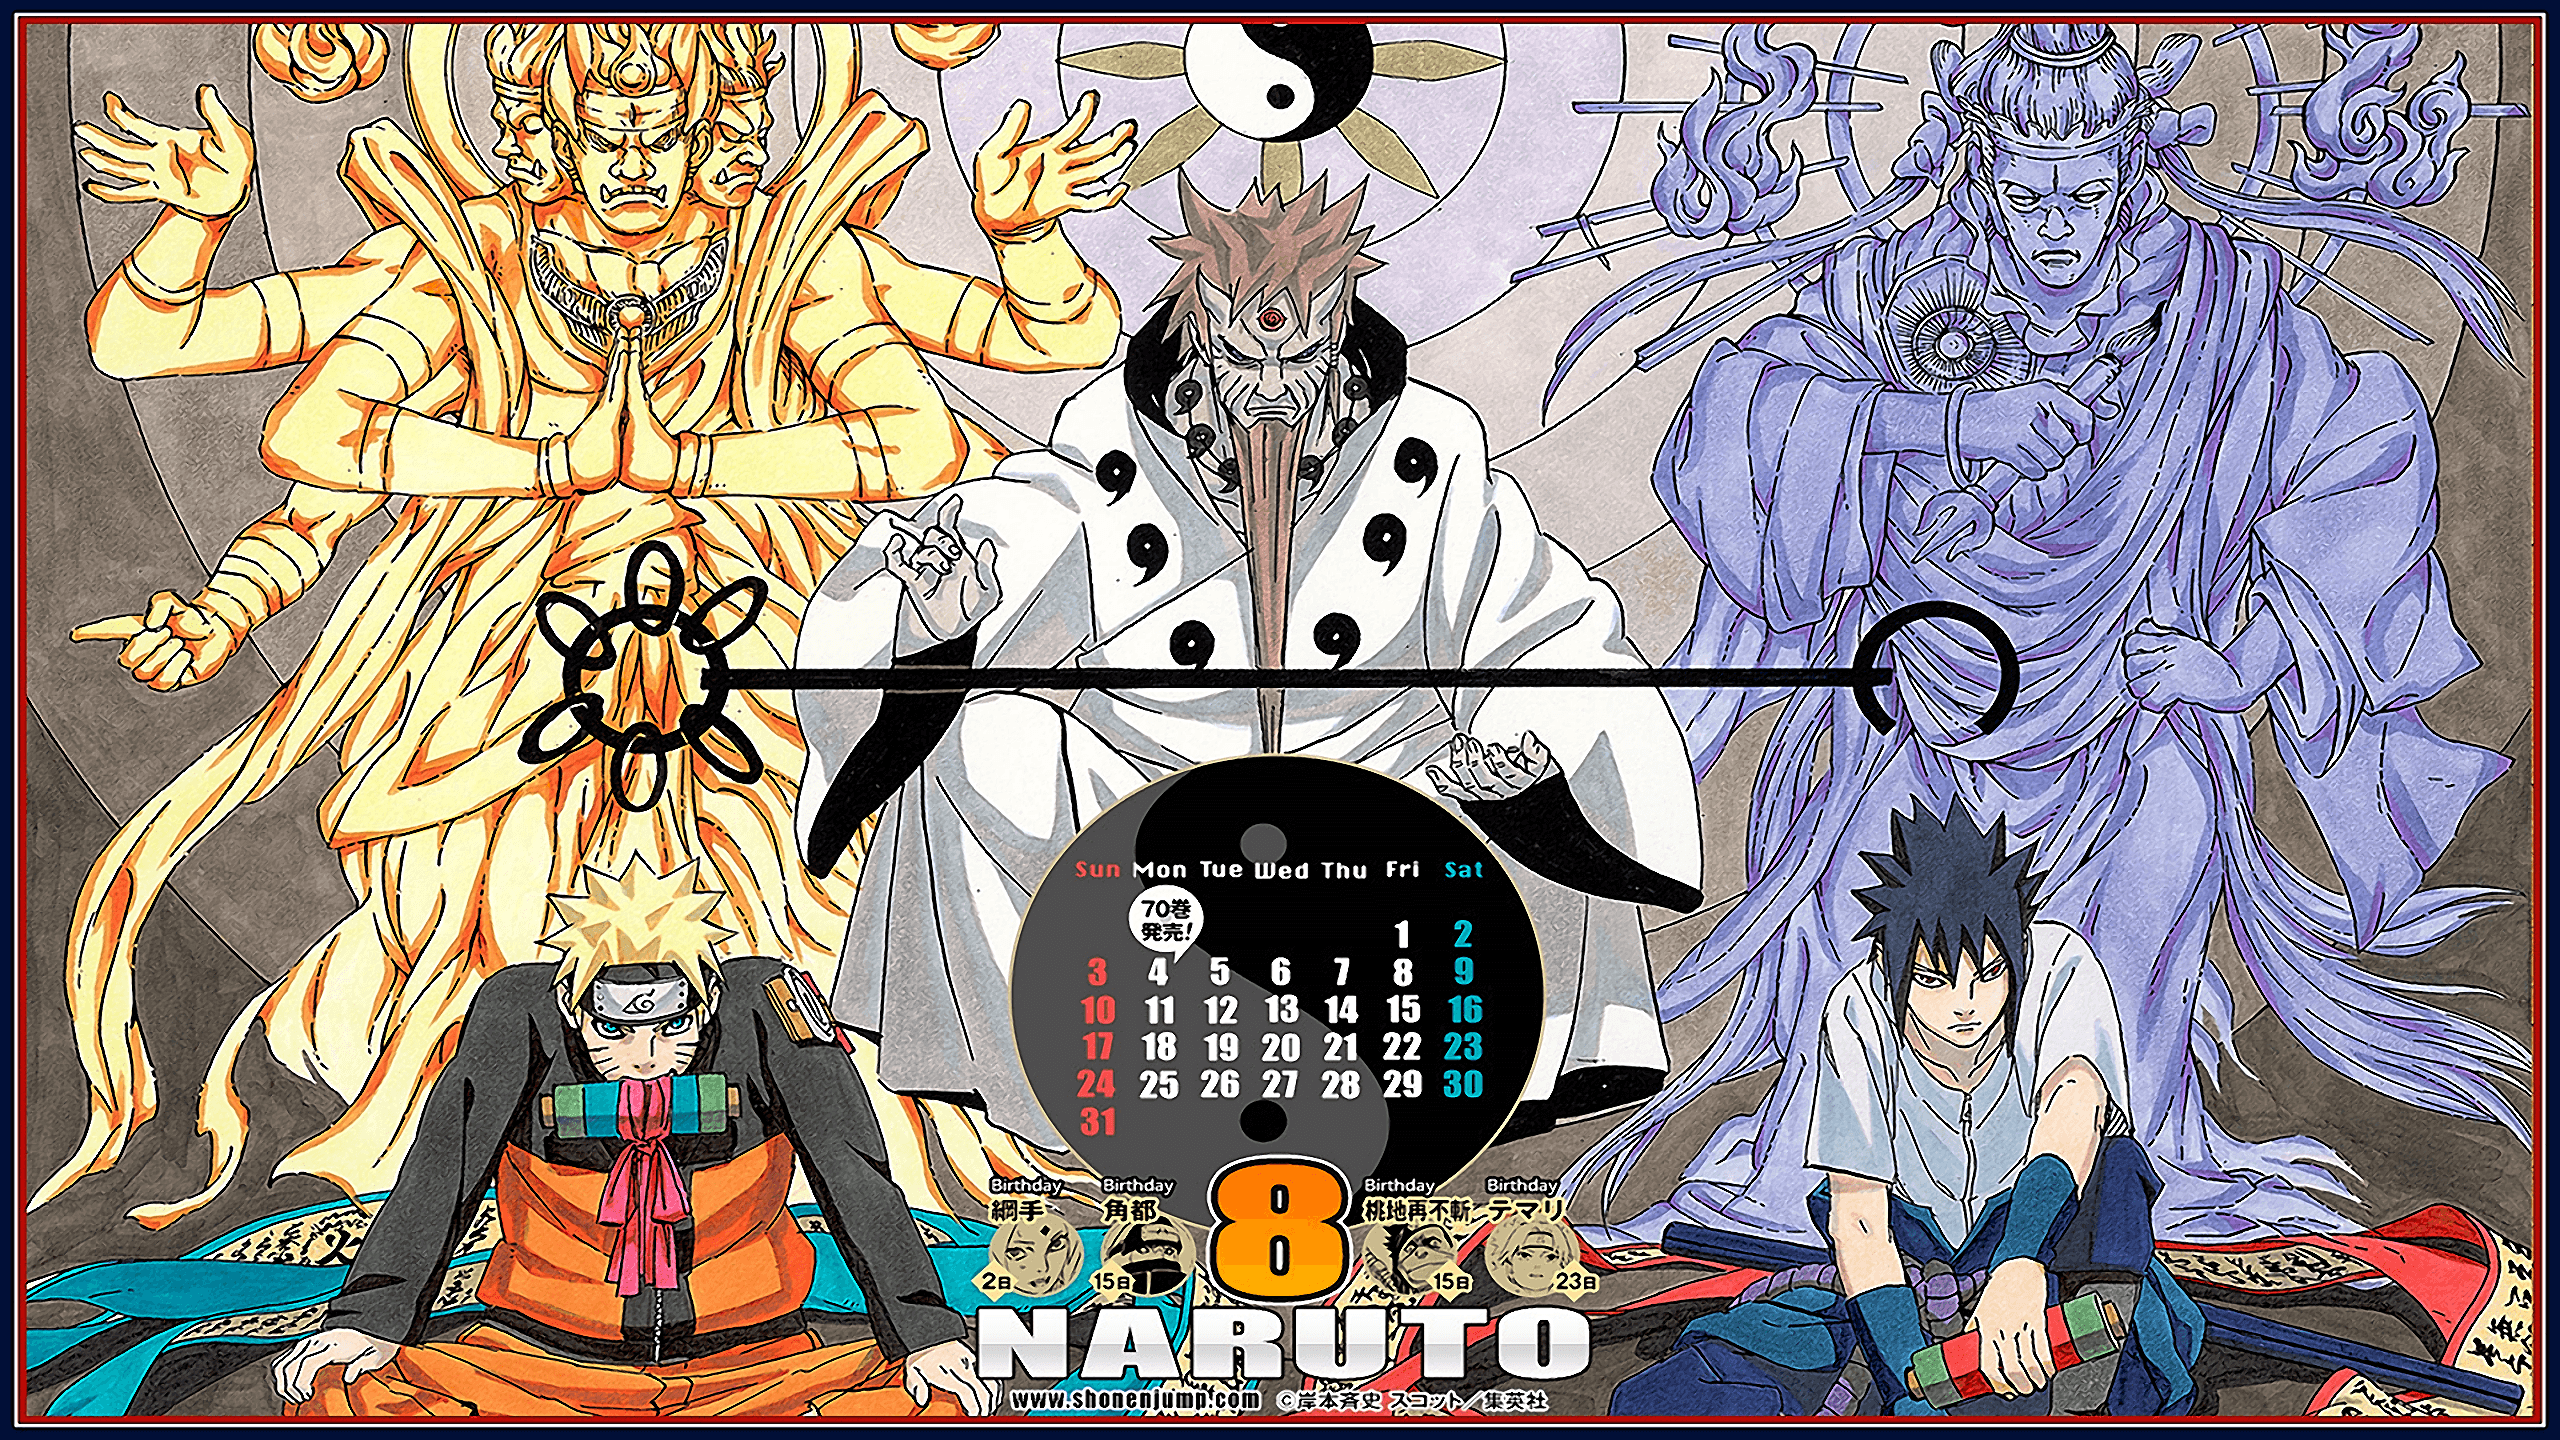 Shonen Jump Naruto calender wallpaper